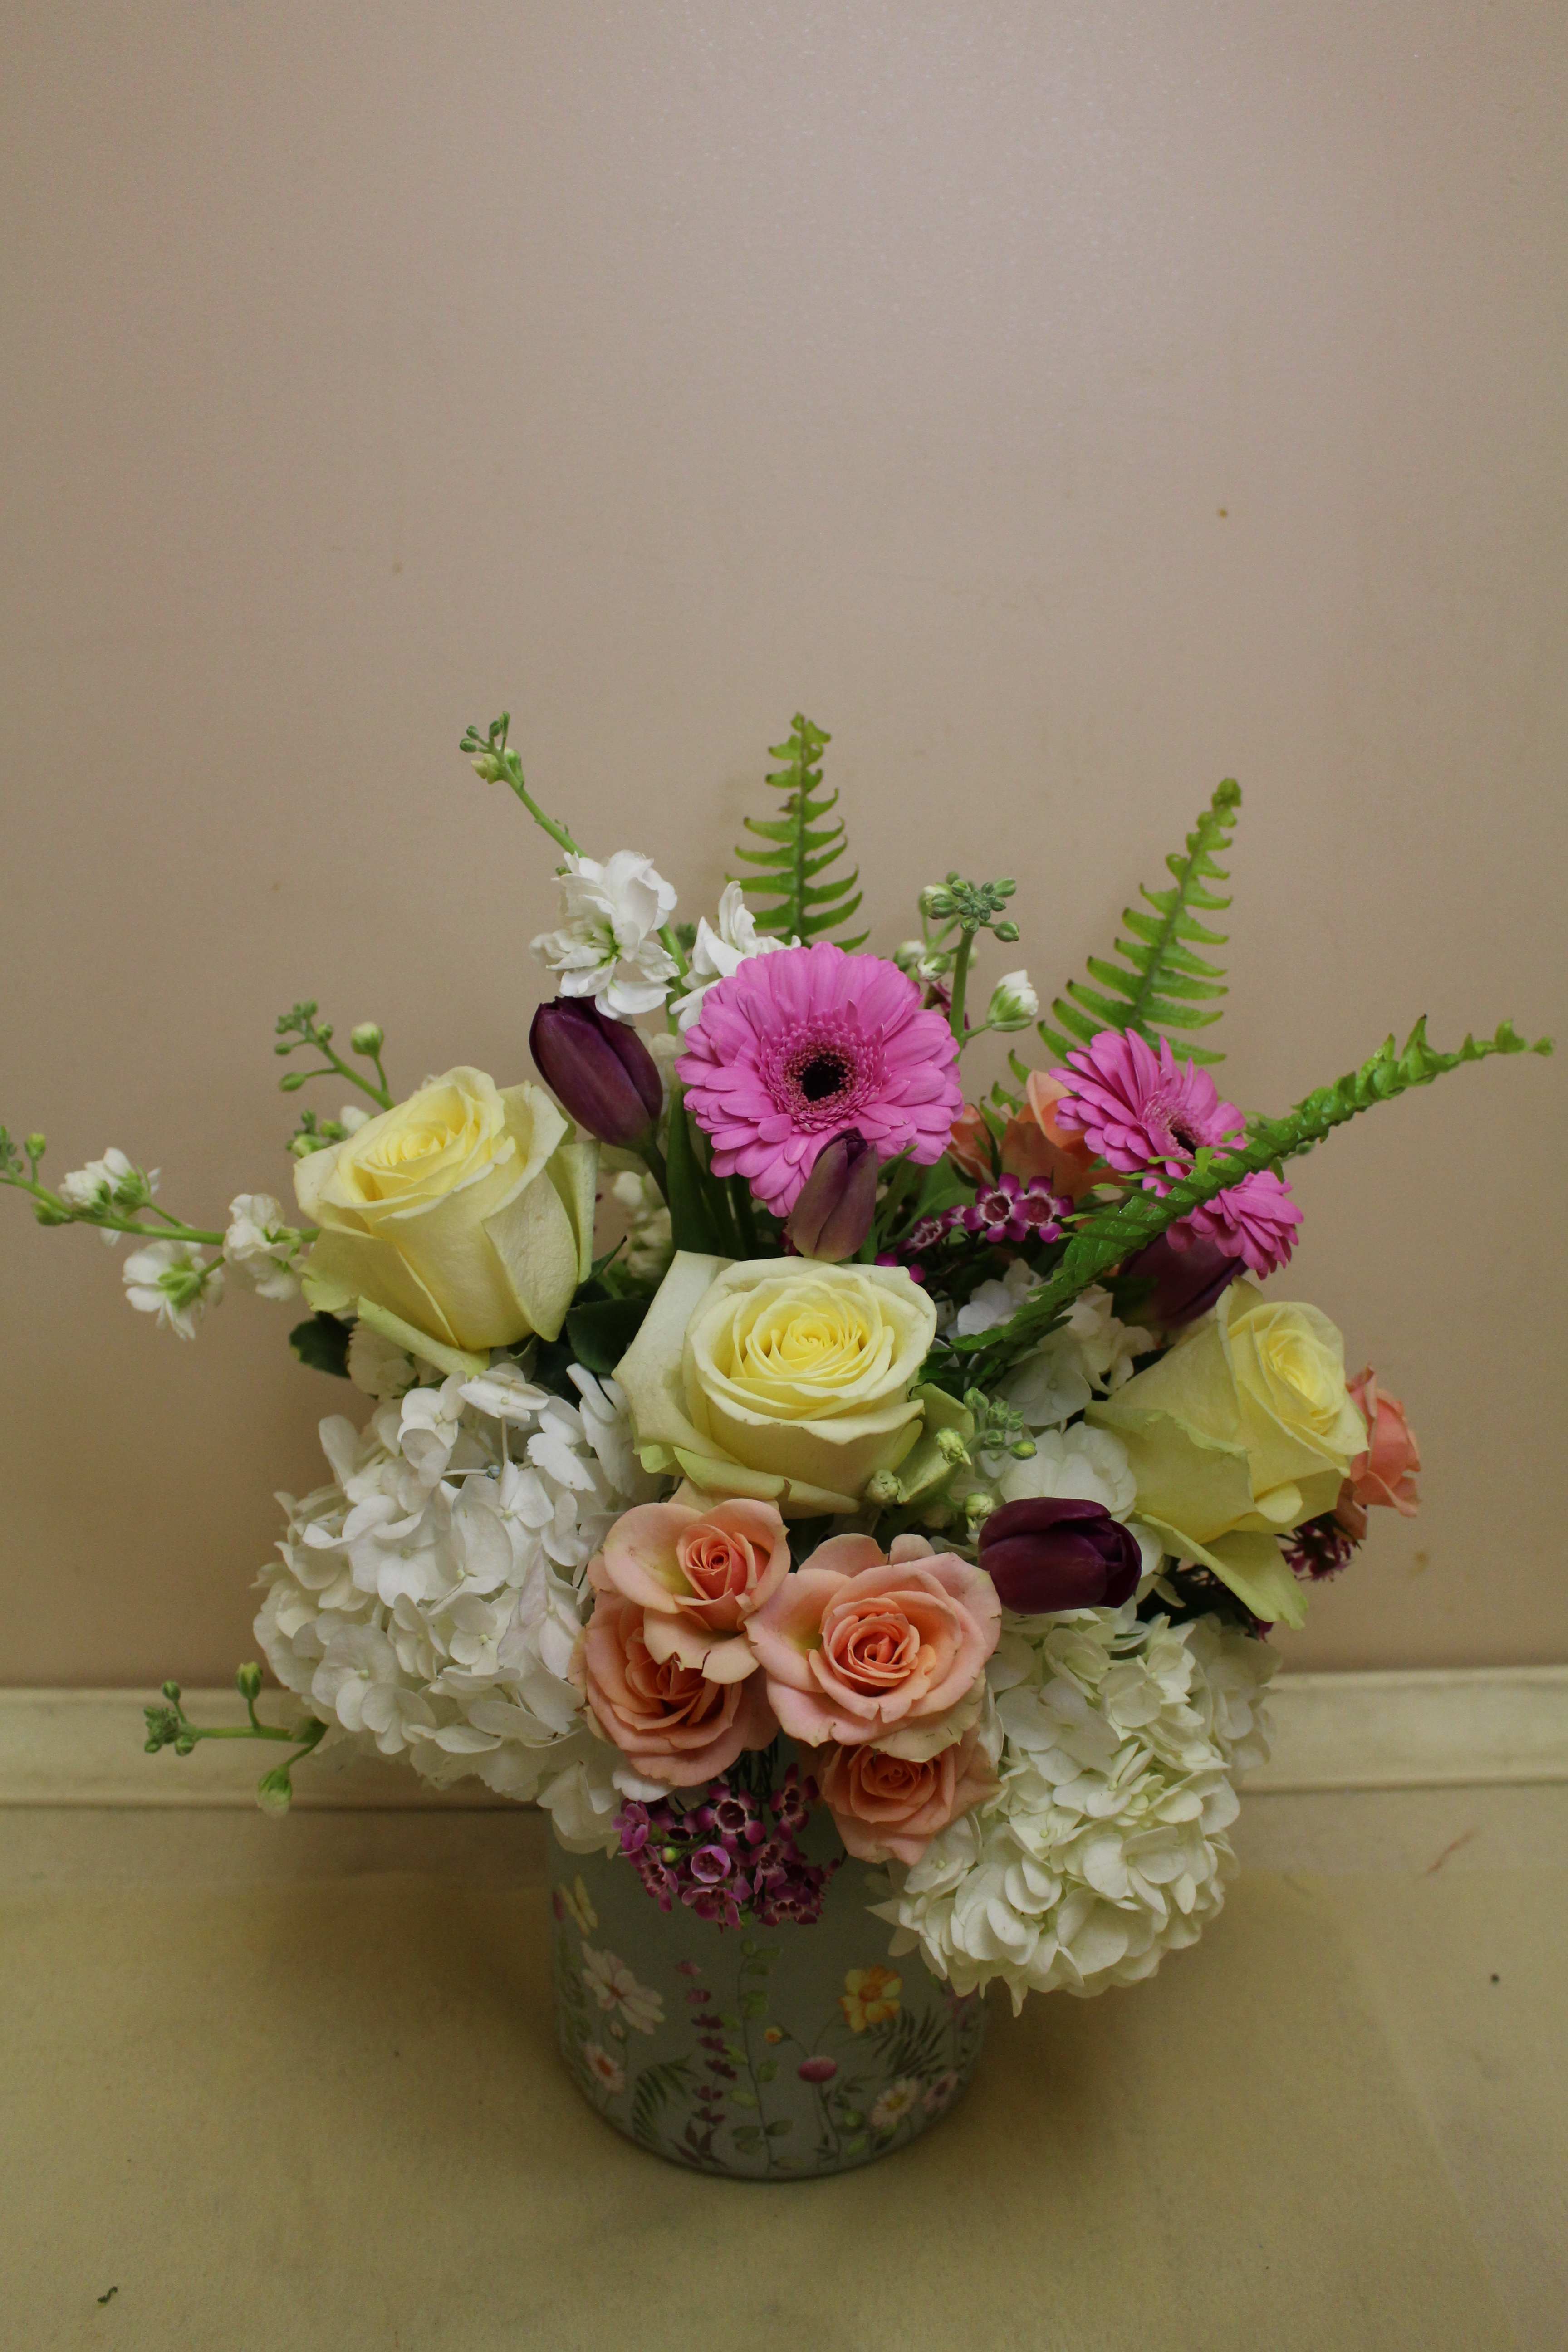 jardin spring flowers - a wildflower vase filled with spring flowers